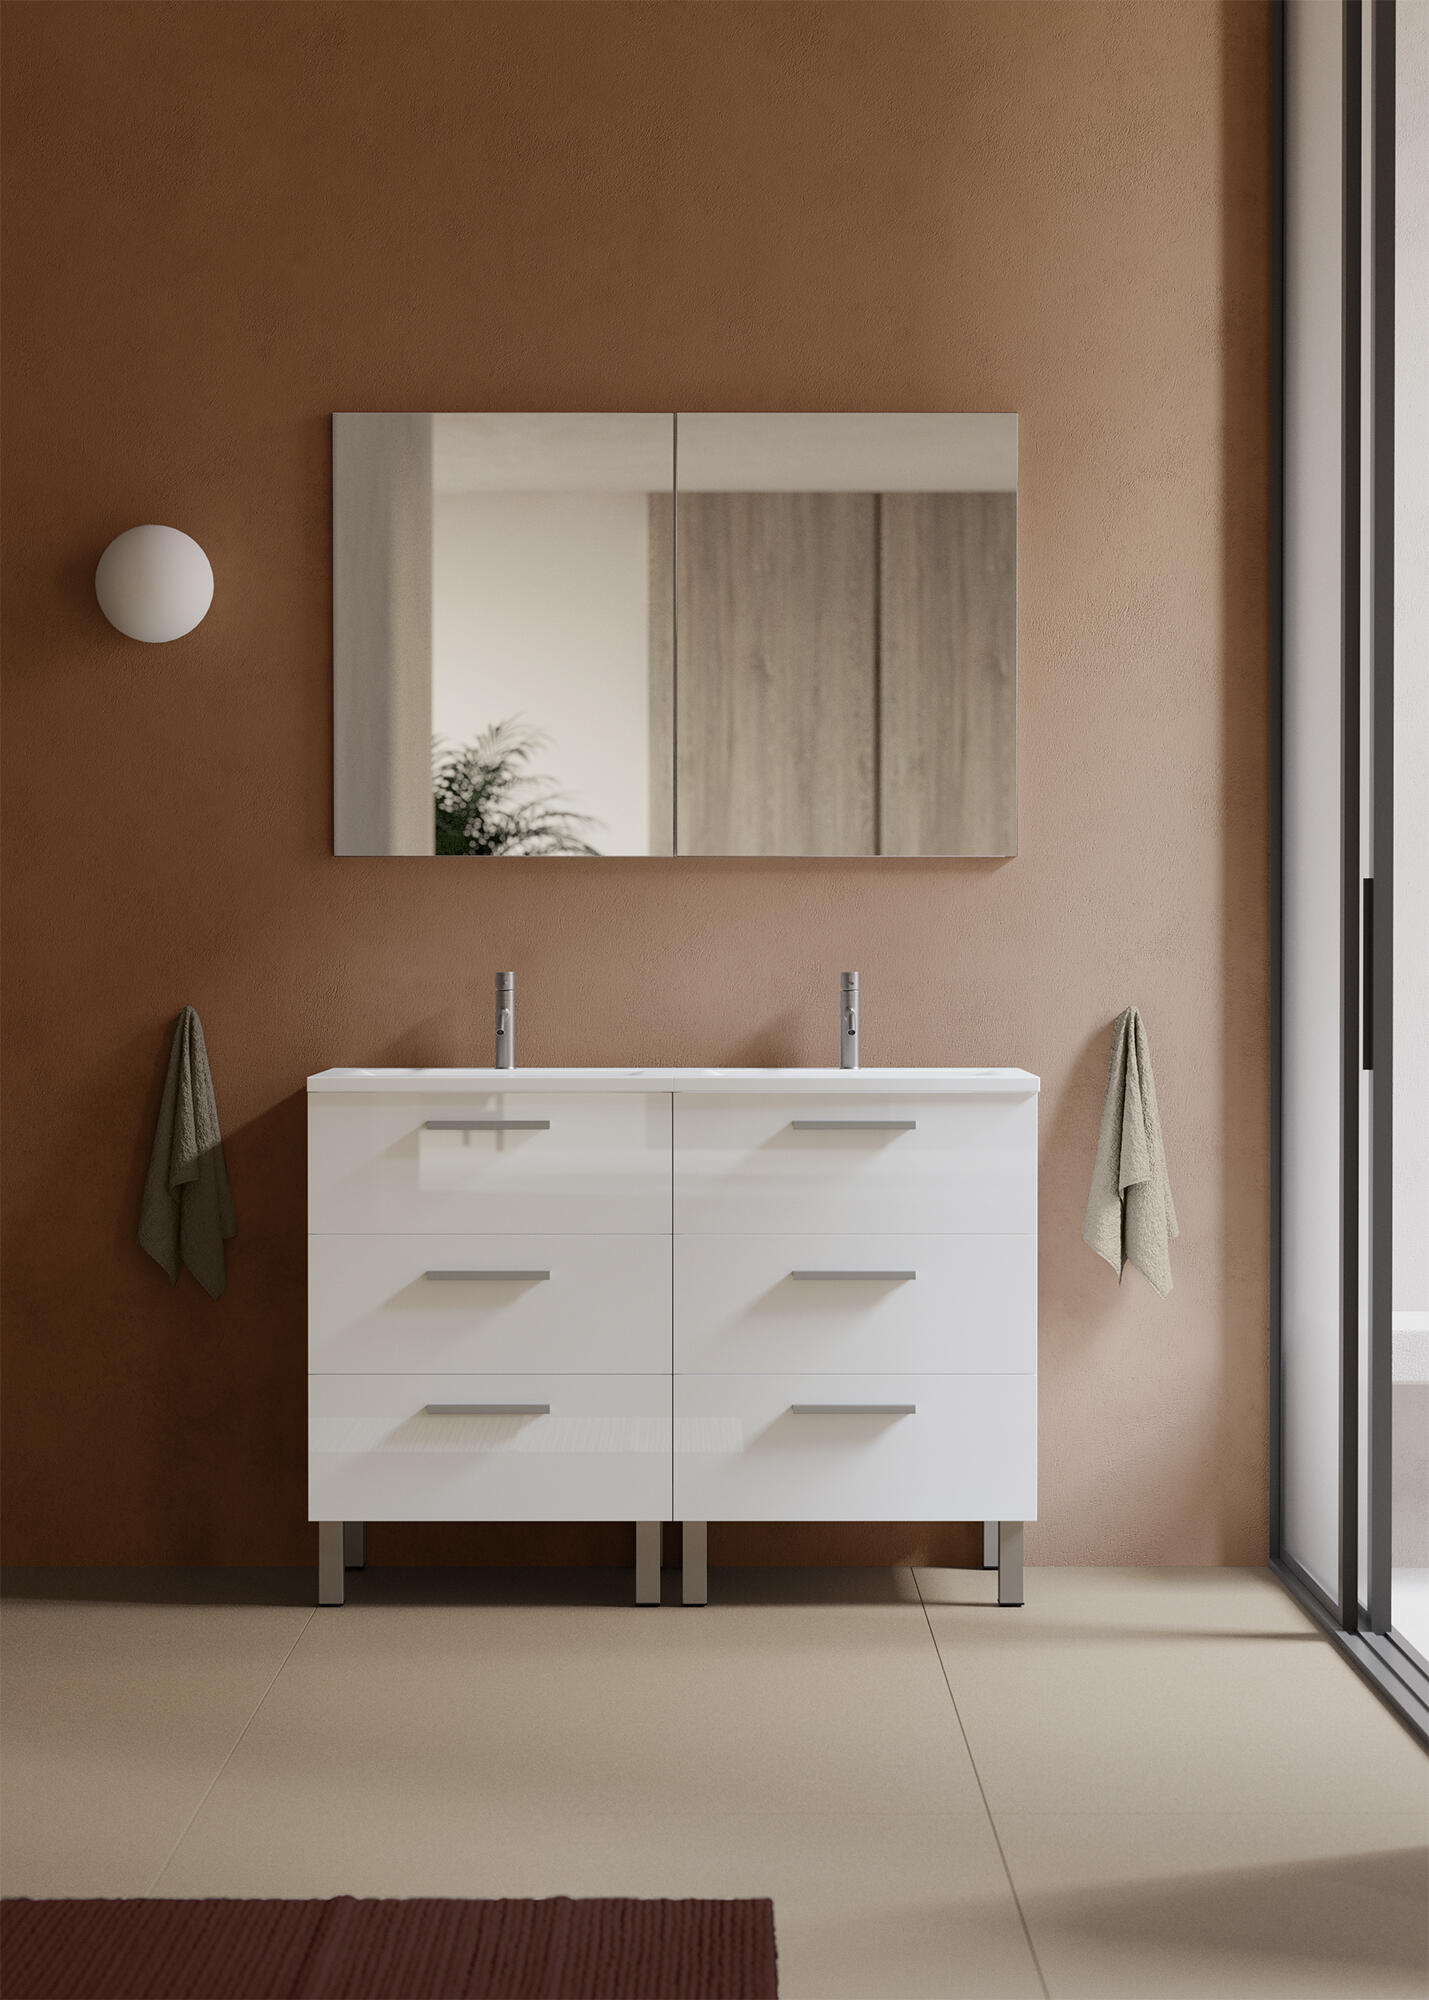 Mueble de baño con lavabo madrid blanco 120x45 cm